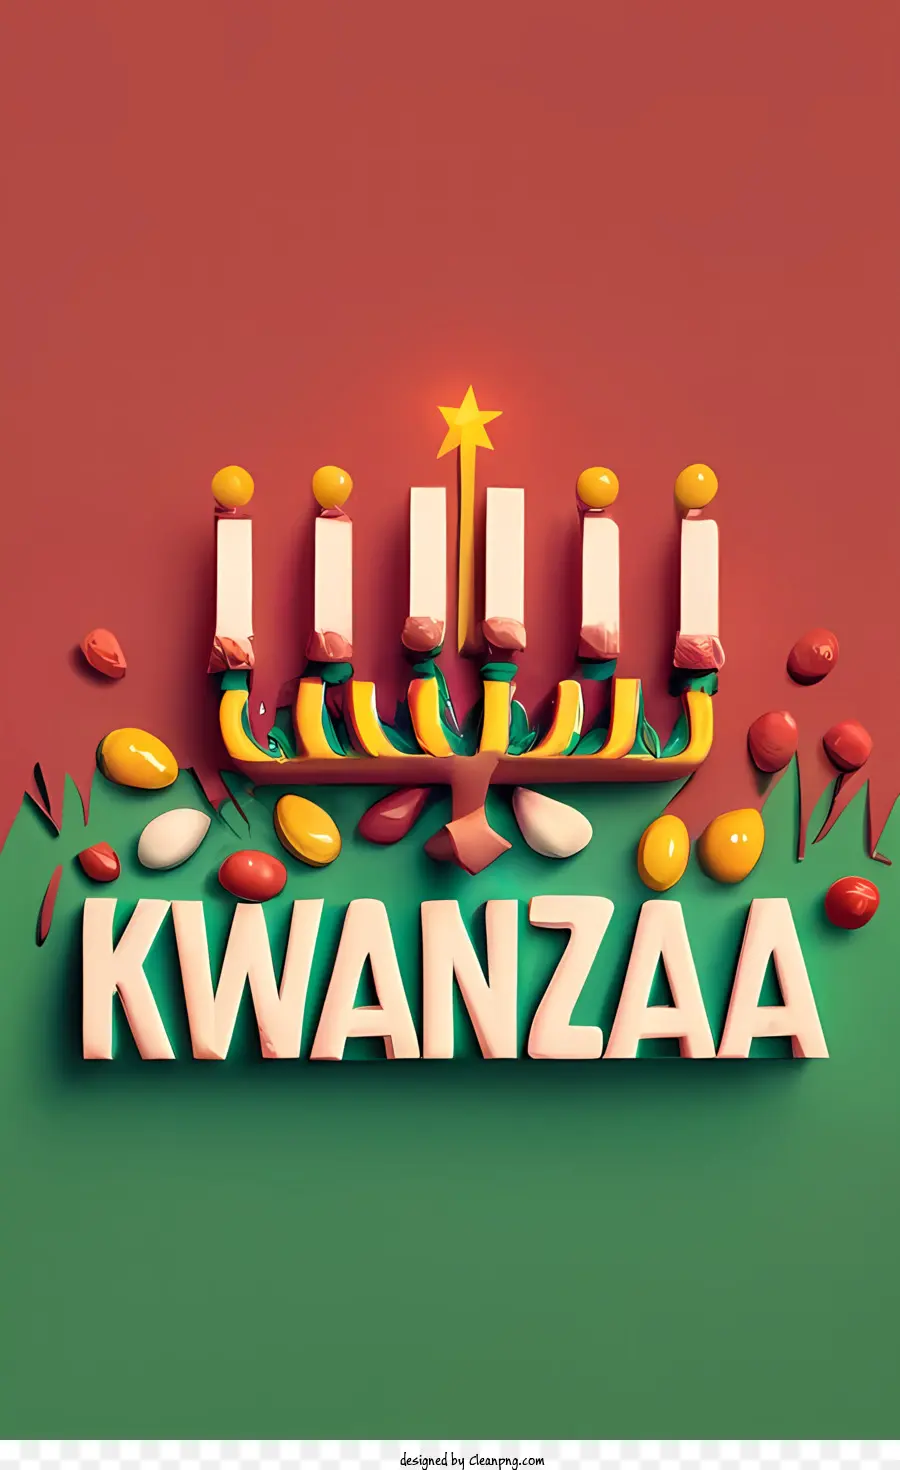 happy kwanzaa kawanzaa holiday celebration decoration